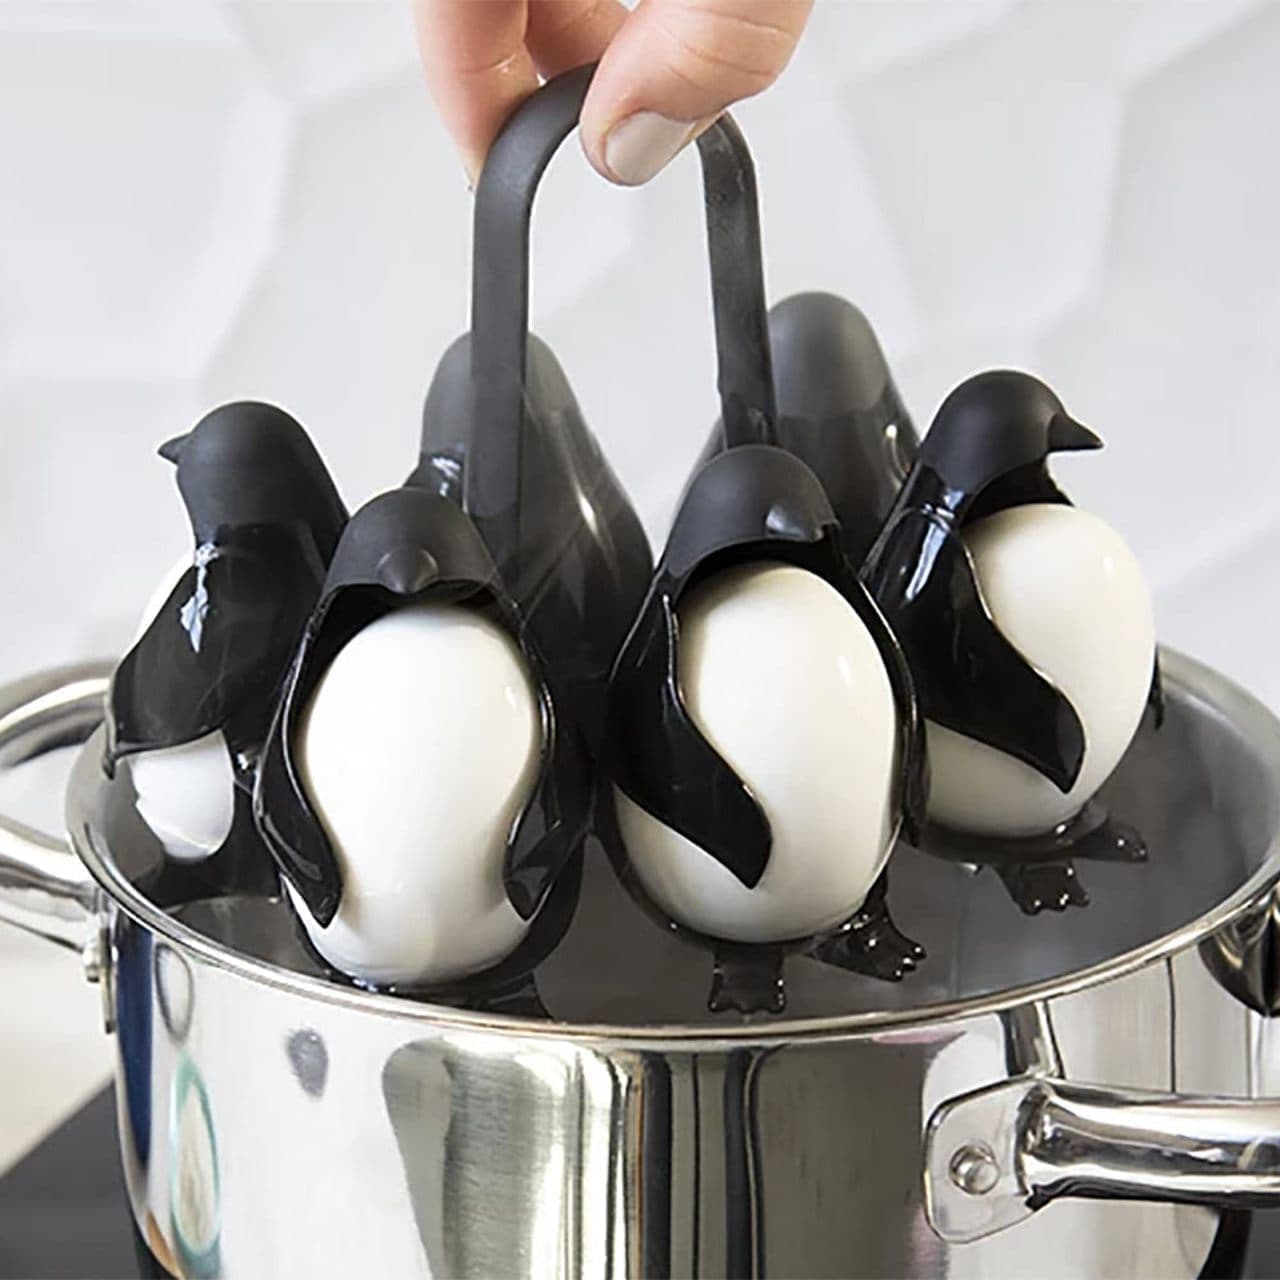 Penguin shaped egg holder "Egguins".